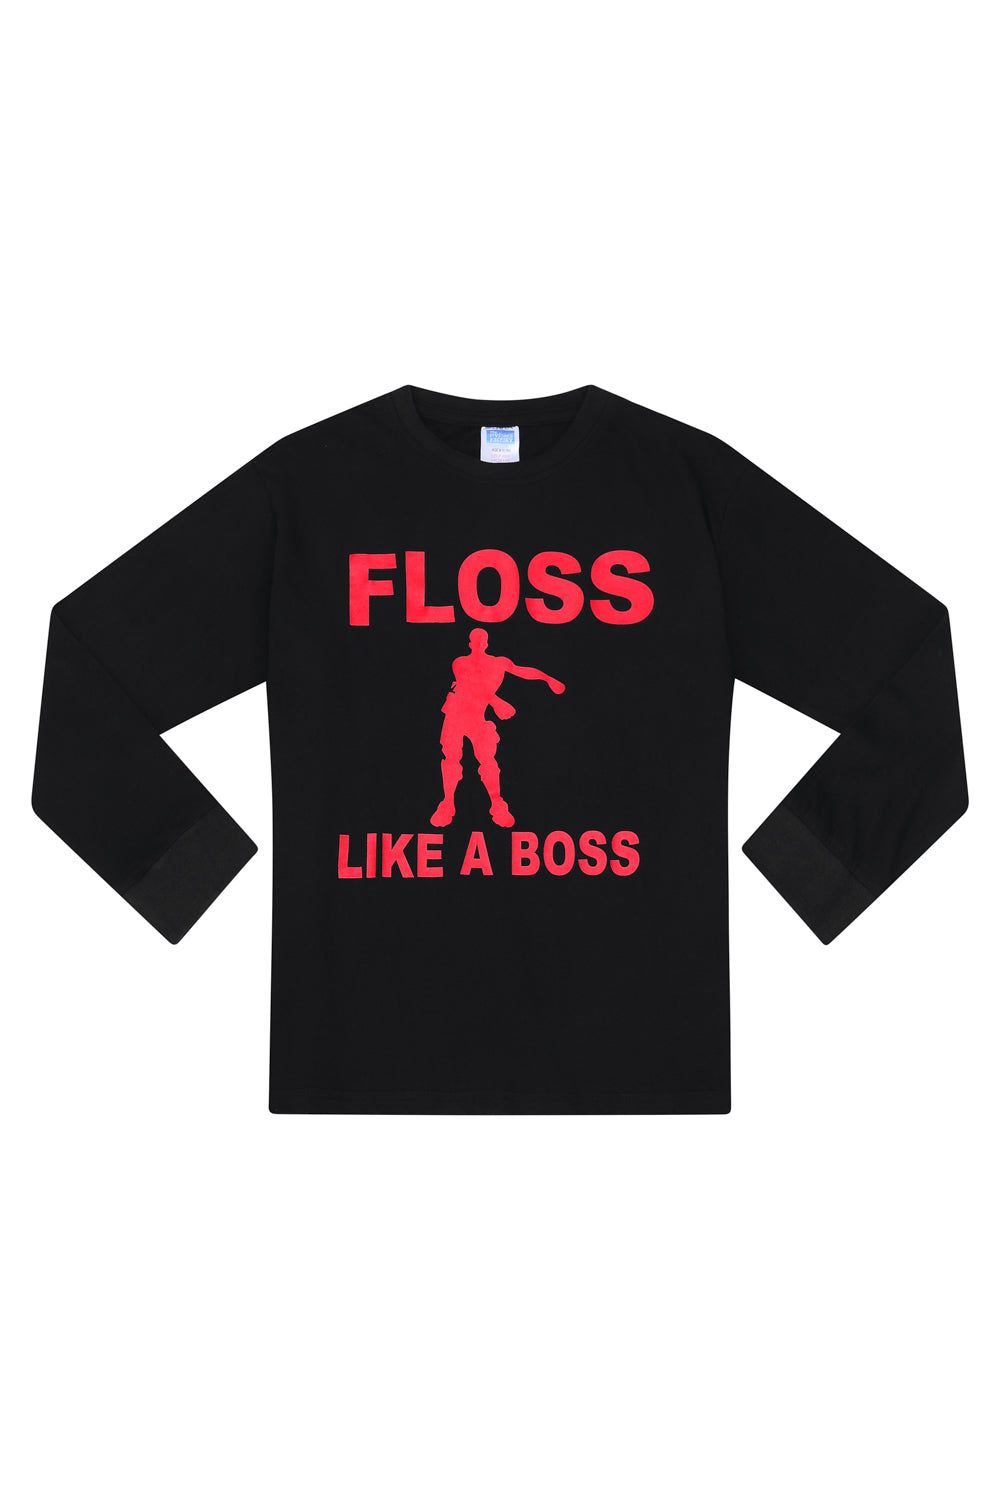 Floss Like a Boss Long Pyjamas - Pyjamas.com